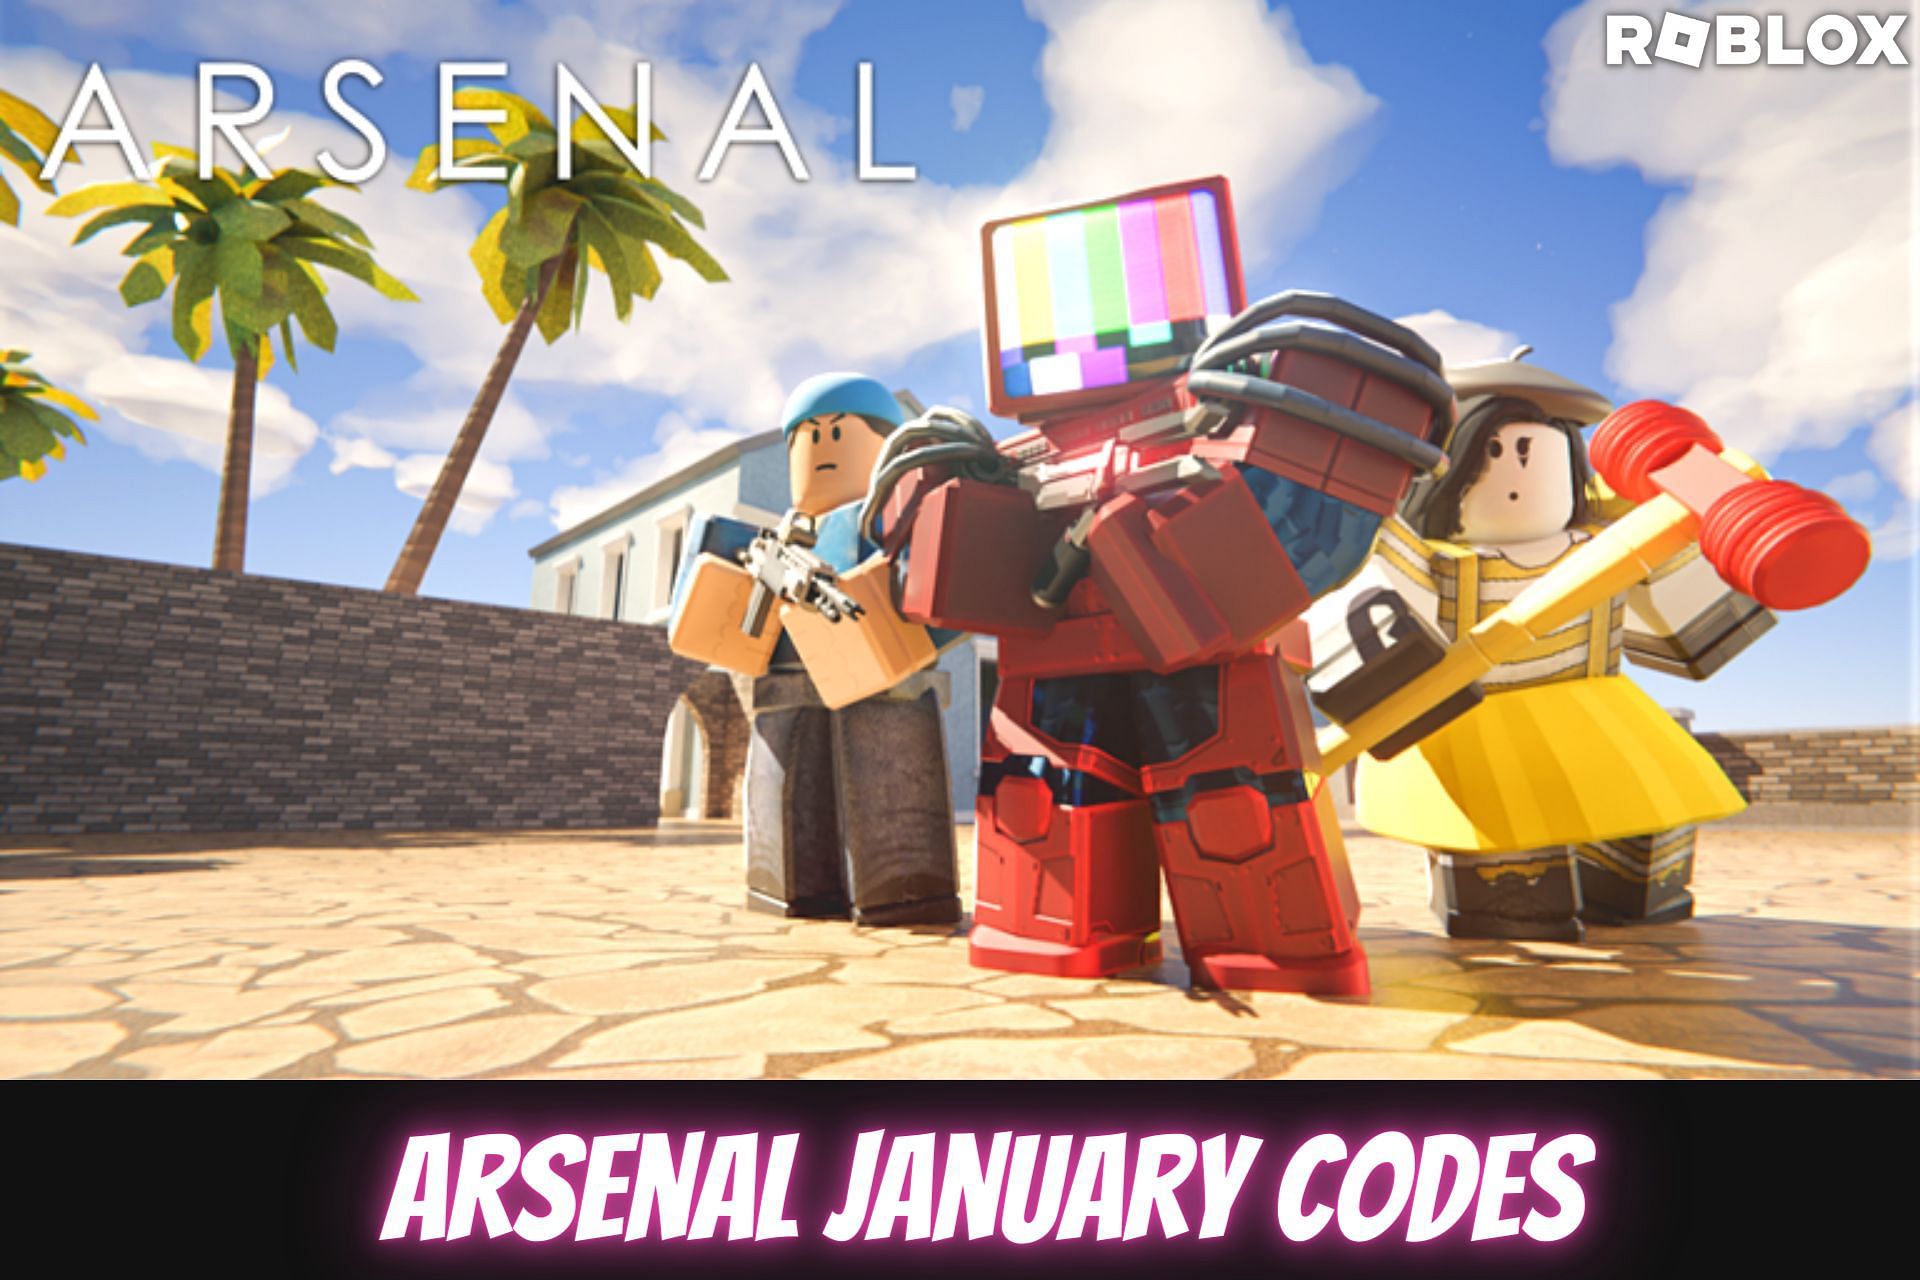 Roblox Arsenal codes (January 2023)